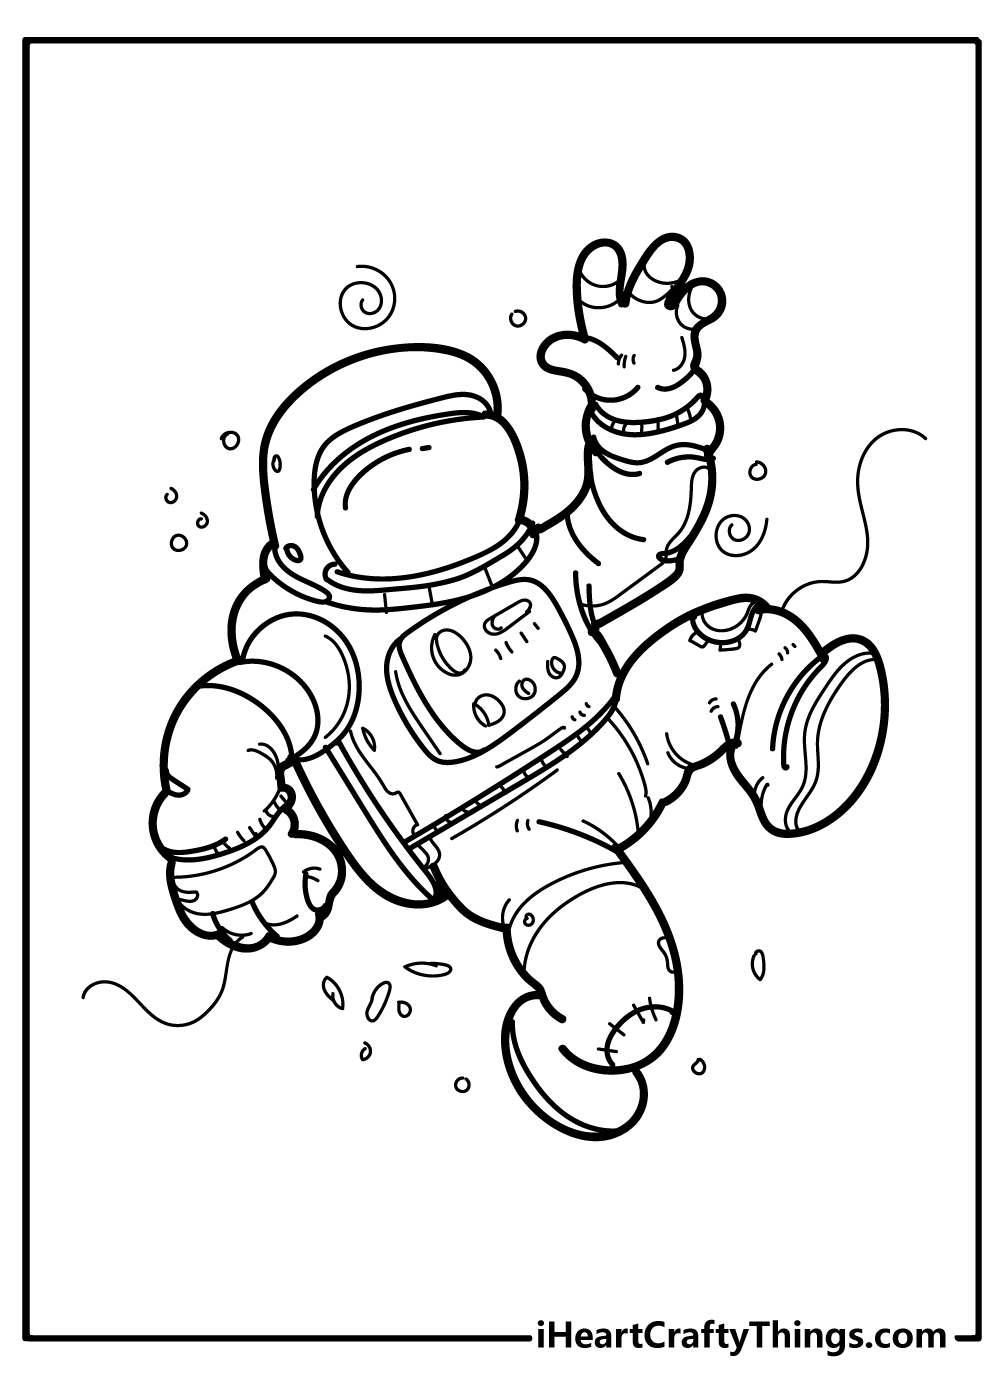 Astronaut Coloring Original Sheet for children free download